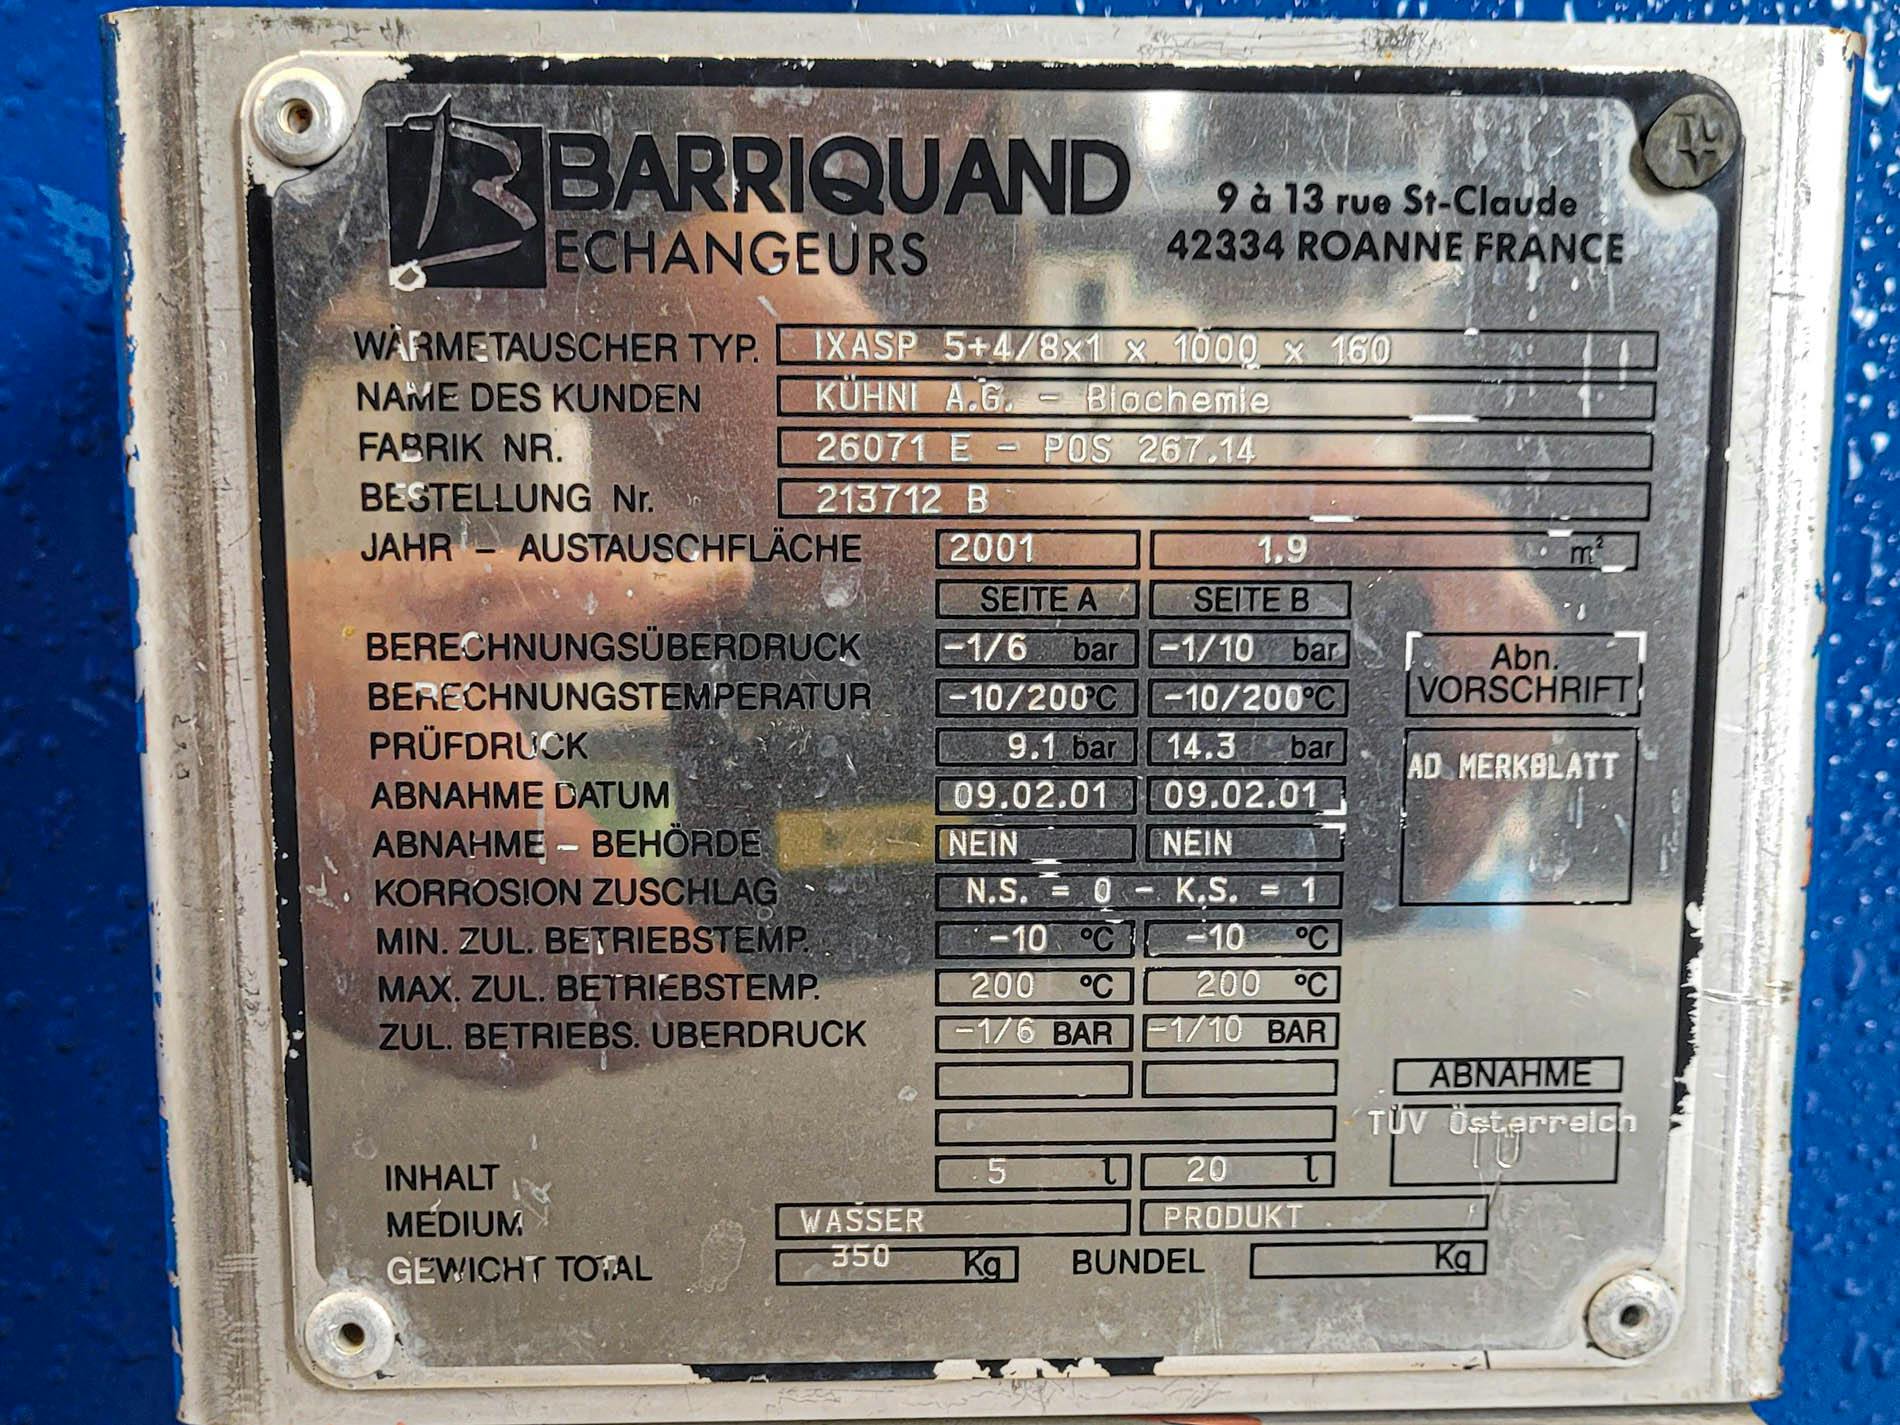 Barriquand IXAP 5+4/8x1 x 1000 x 160 - 1,9 m² - Plate heat exchanger - image 9